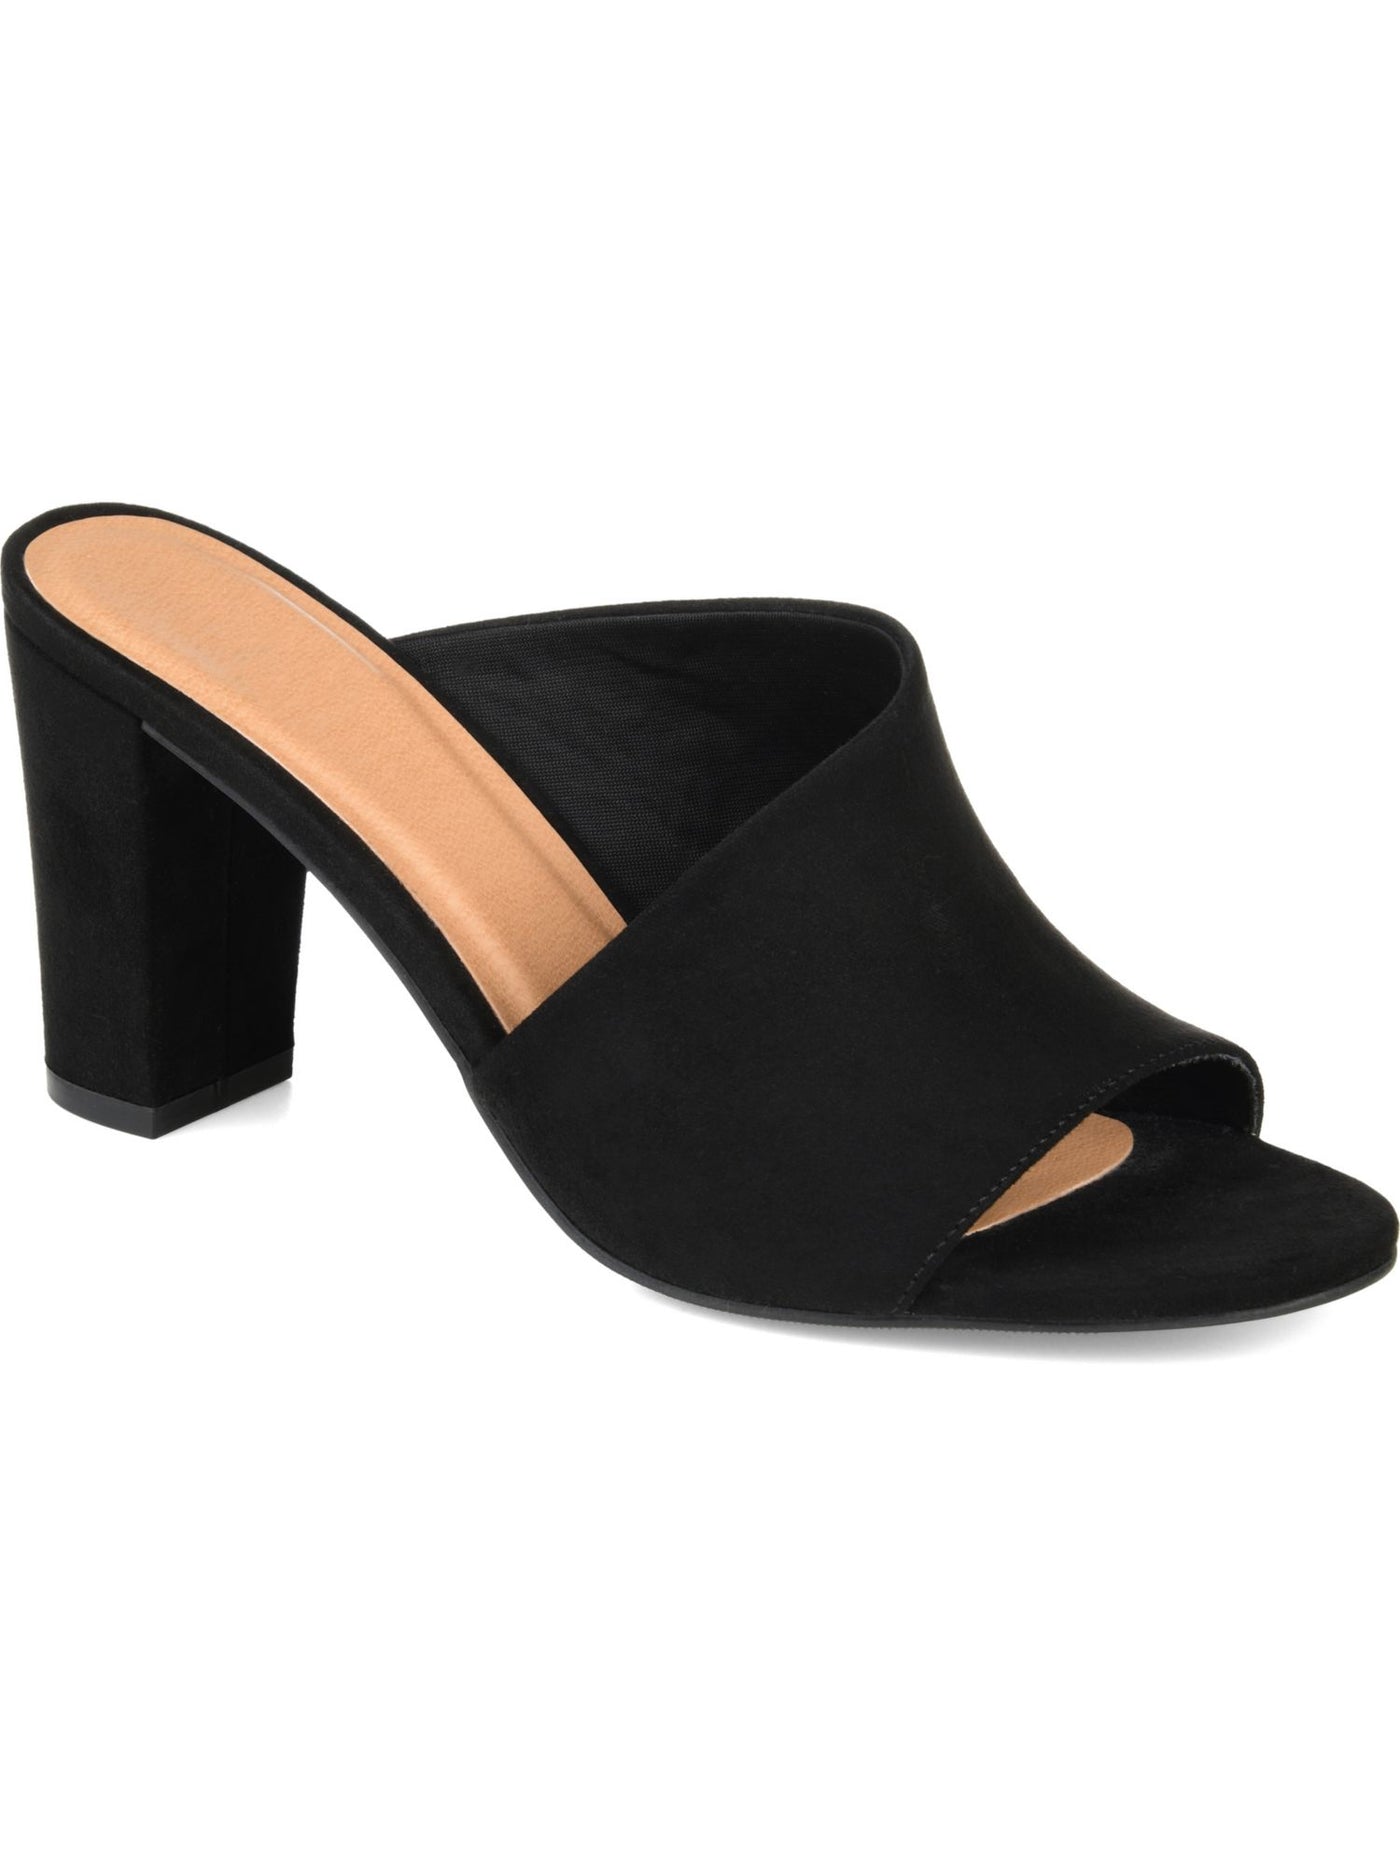 JOURNEE COLLECTION Womens Black Padded Asymmetrical Allea Round Toe Block Heel Slip On Dress Sandals Shoes 5.5